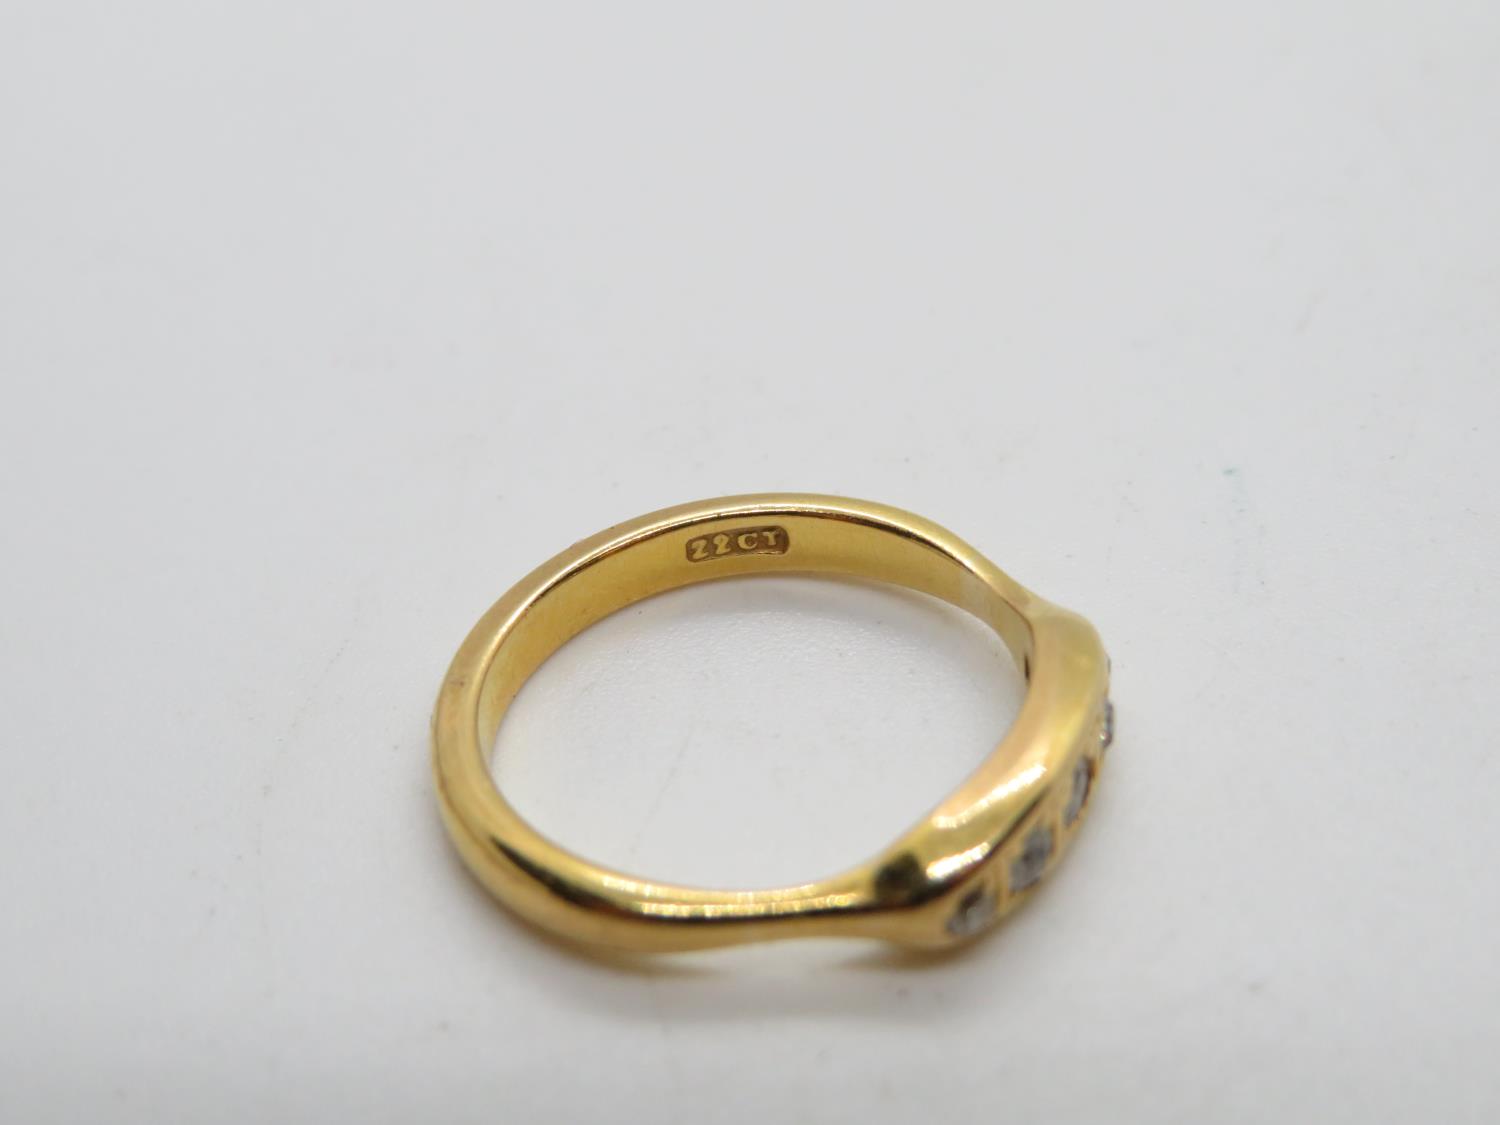 HM 22ct gold firestone diamond 3.4g ring size K+.5 - Image 2 of 2